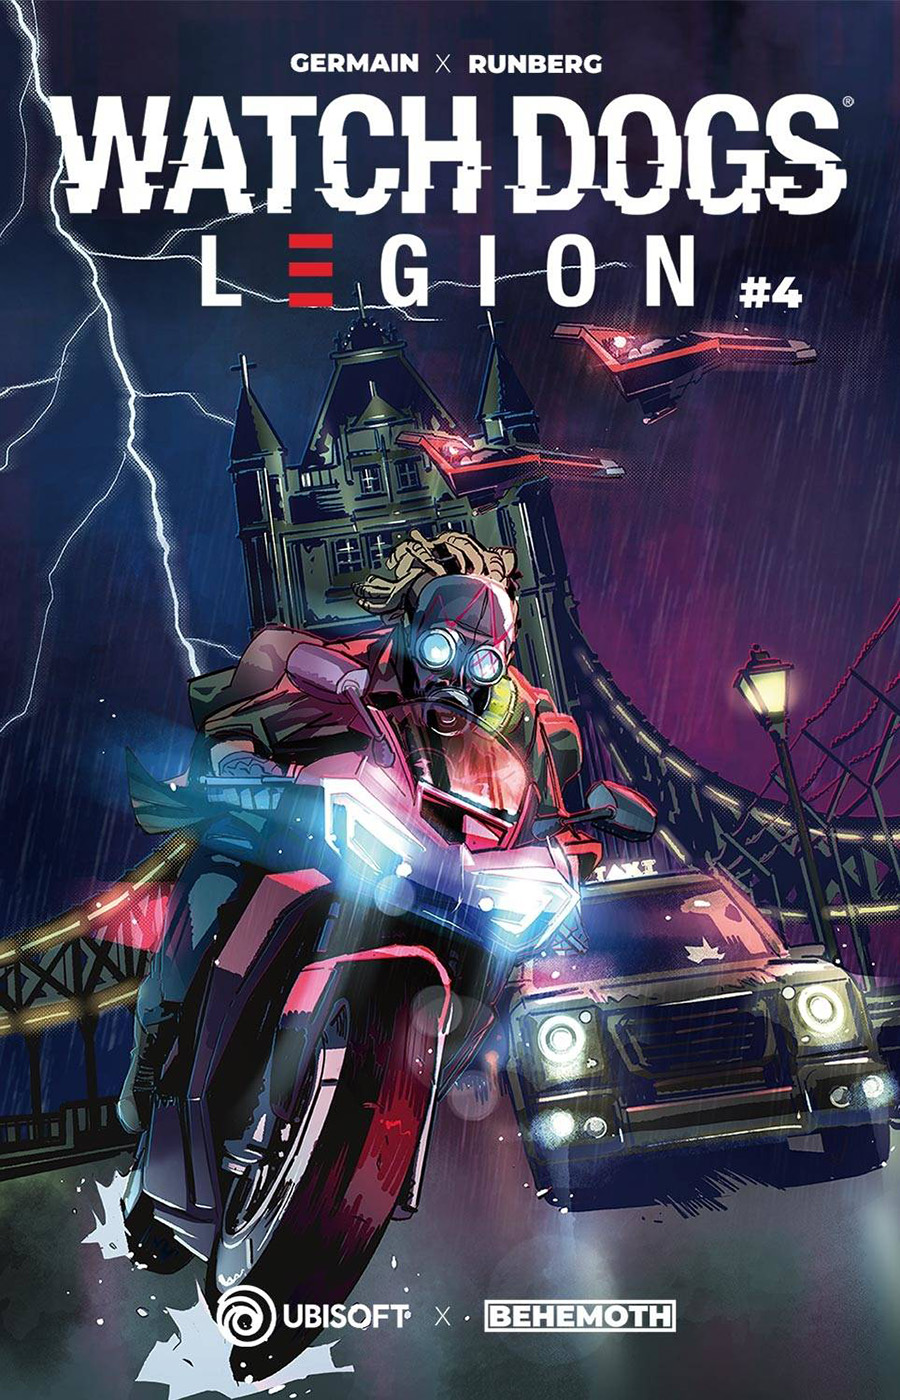 Watch Dogs Legion #4 Cover B Variant Alberto Massaggia Cover